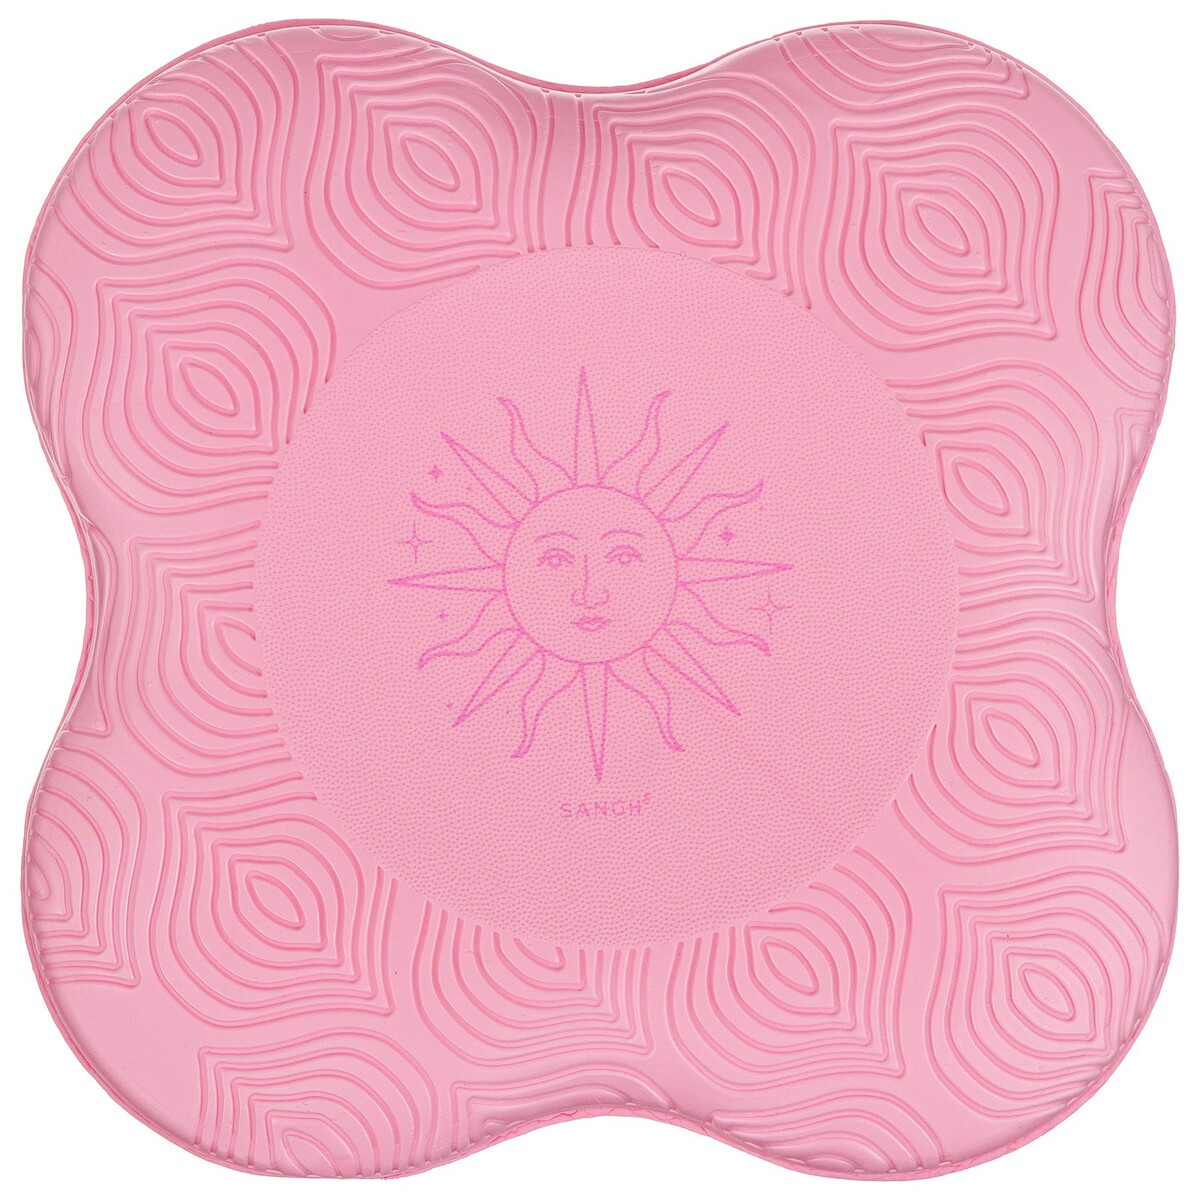 Коврик под колени для йоги sangh sun, 20х20 см, цвет розовый коврик гимнастический body form 173x61x0 3 см bf ym01 розовый